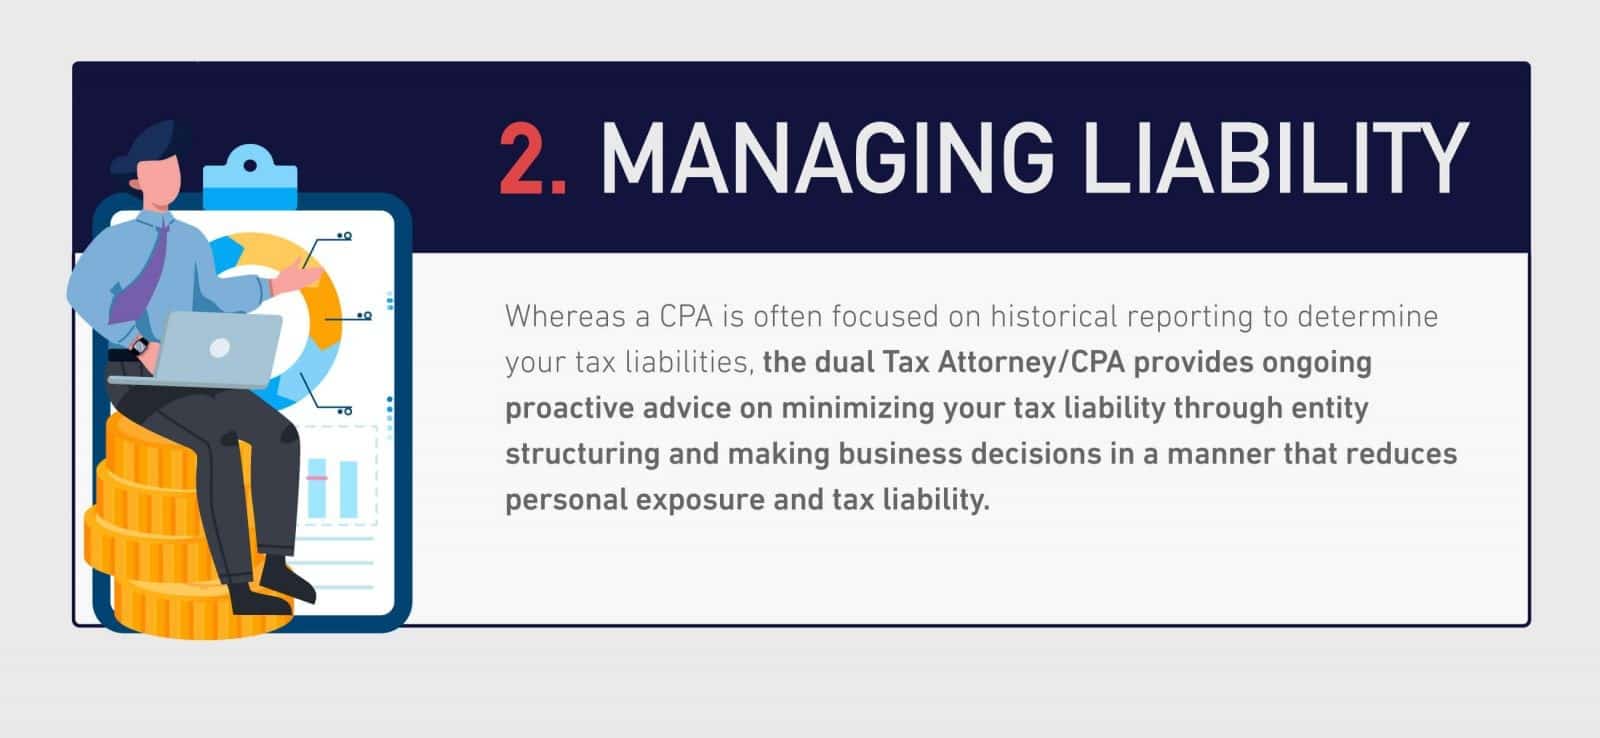 Managing-liability-klasing-associates-sacramento-tax-attorney